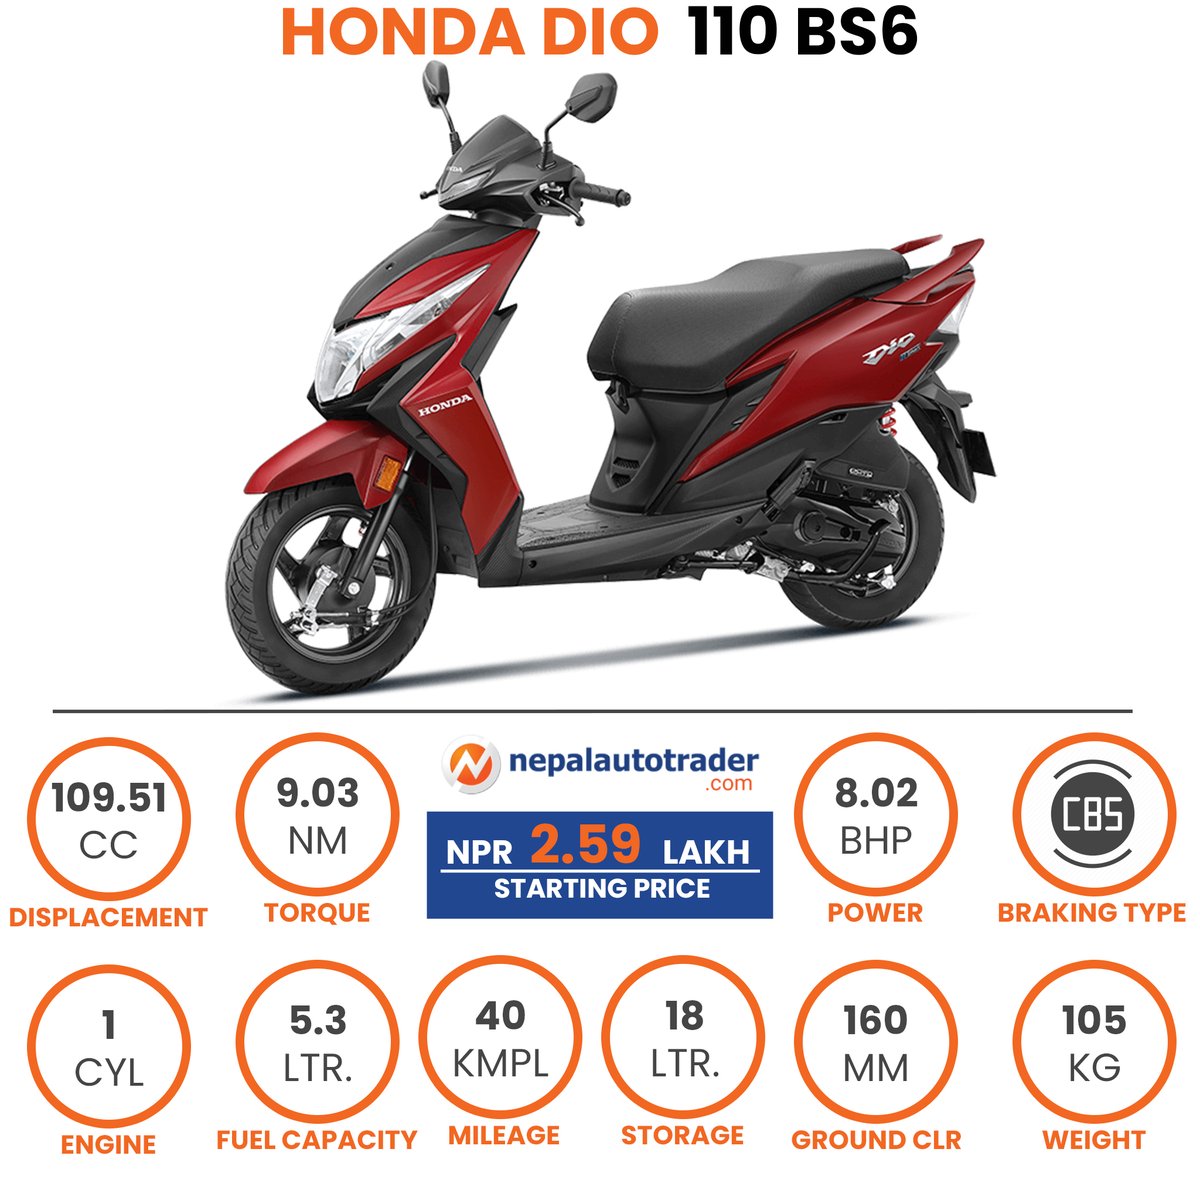 Honda Dio 110 BS6 Quick Specifications. #Autonews #AutonewsNepal #Scooters #ScootersNepal #HondaScooters #HondaNepal #HondaDio #HondaDio110 #HondaDio110BS6 #Nepalautotrader